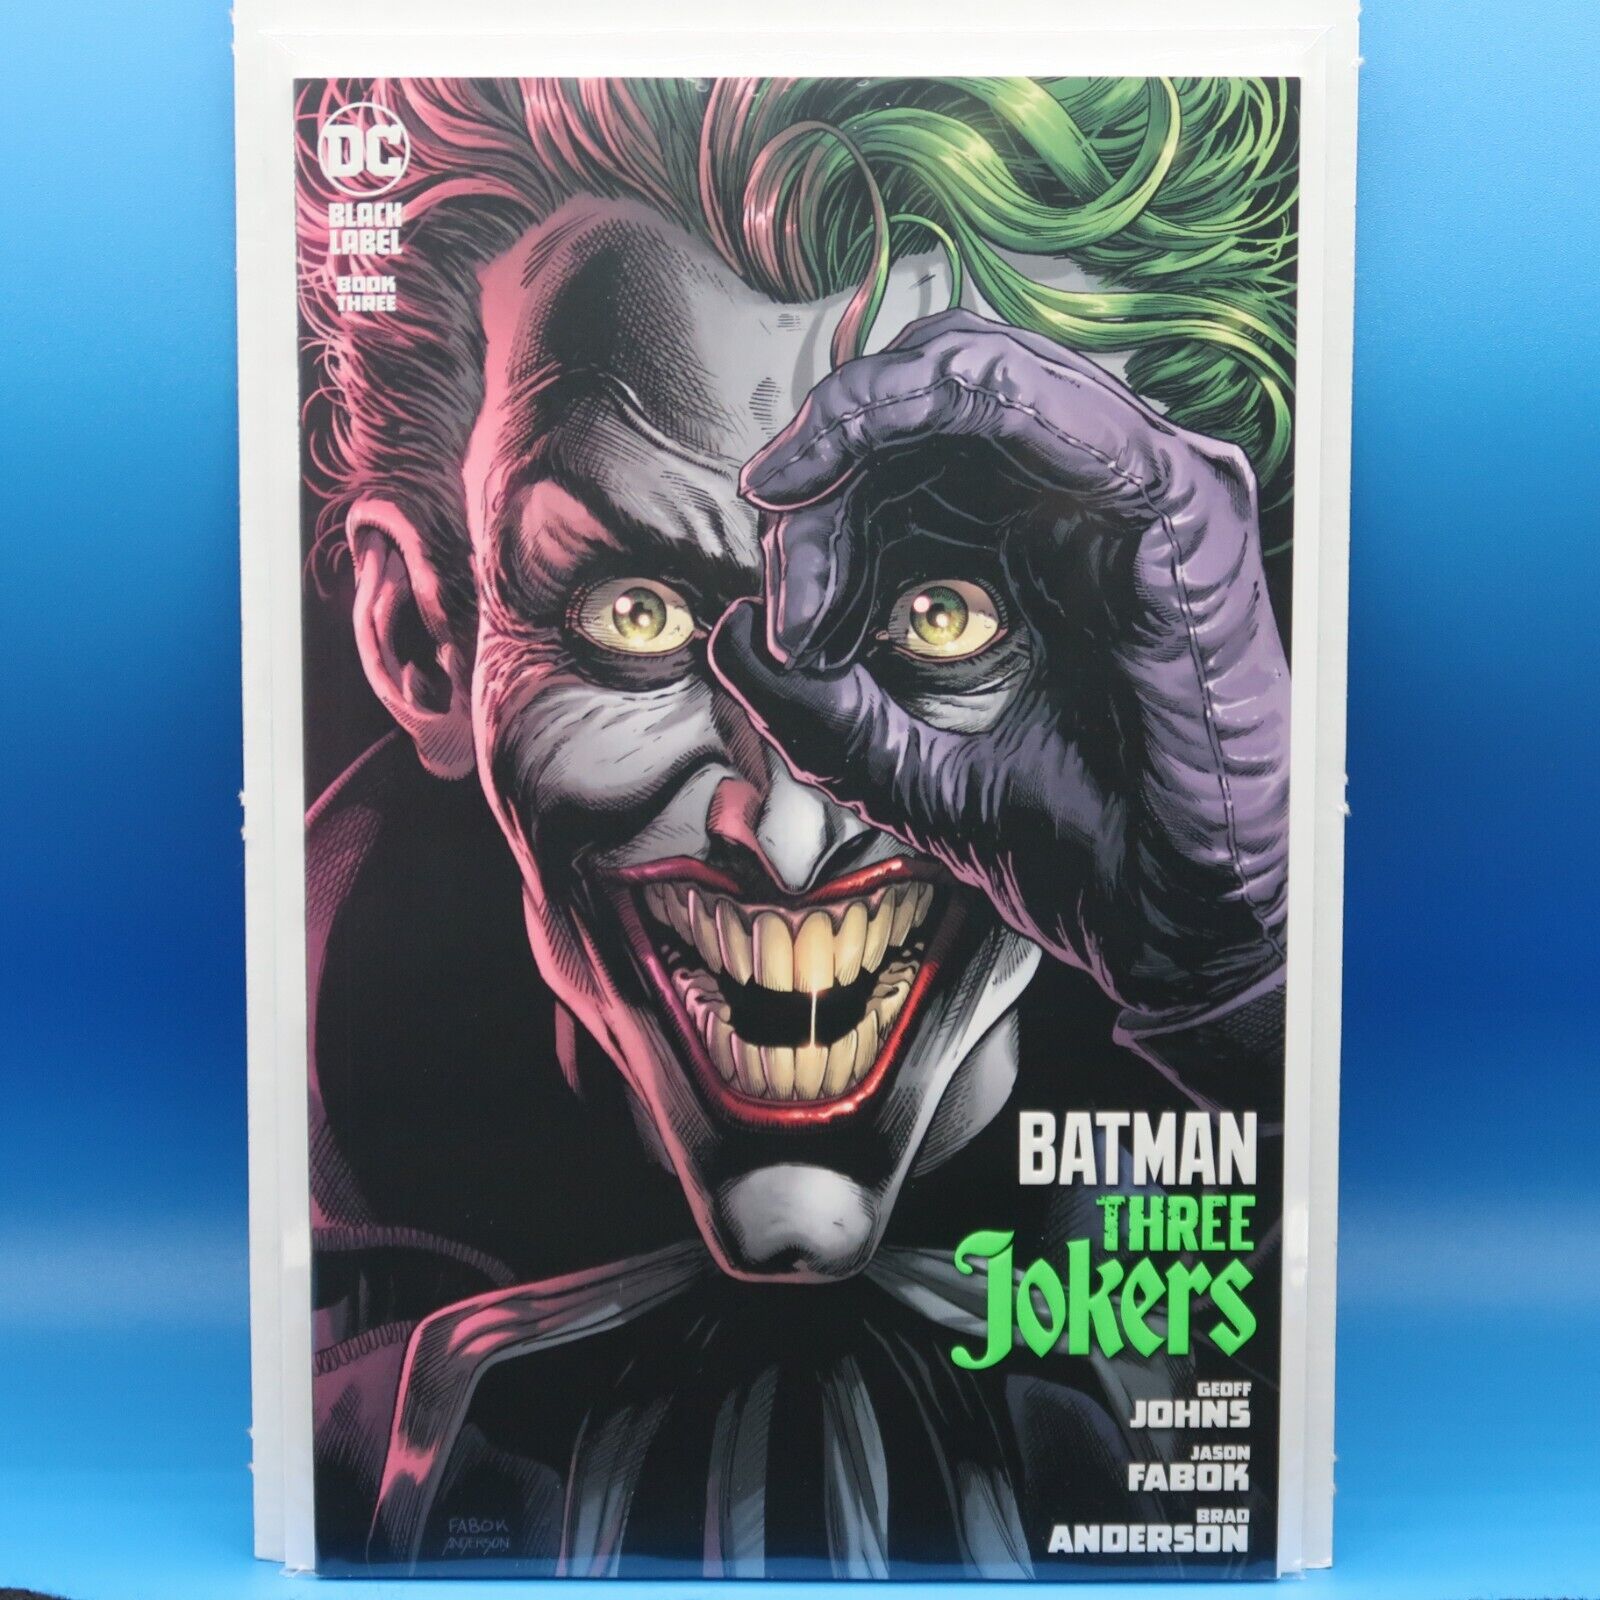 Batman: The Three Jokers #3 - Part 3 of a Three Part Series - NM/M